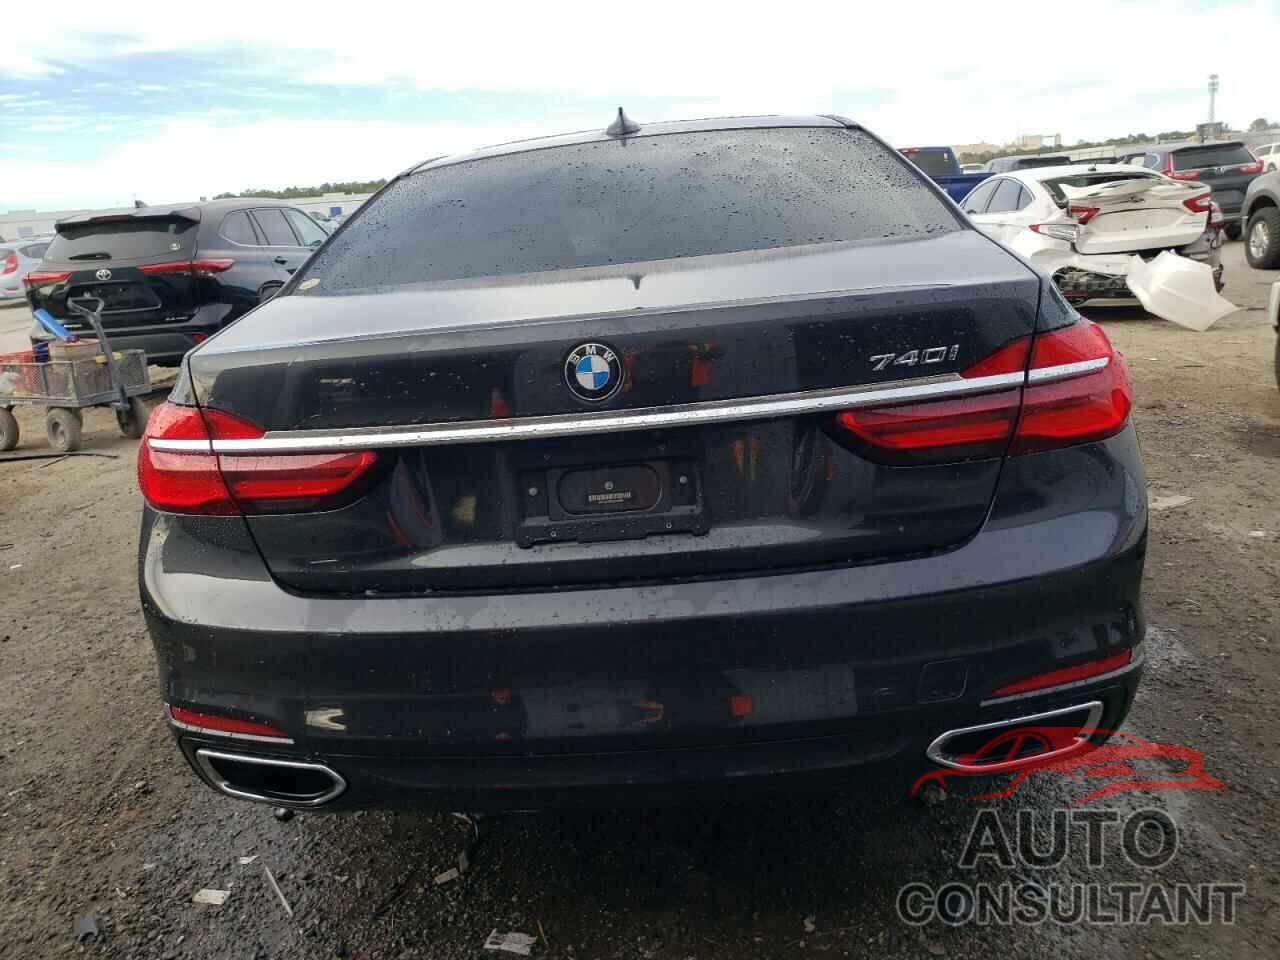 BMW 7 SERIES 2016 - WBA7E2C53GG504690